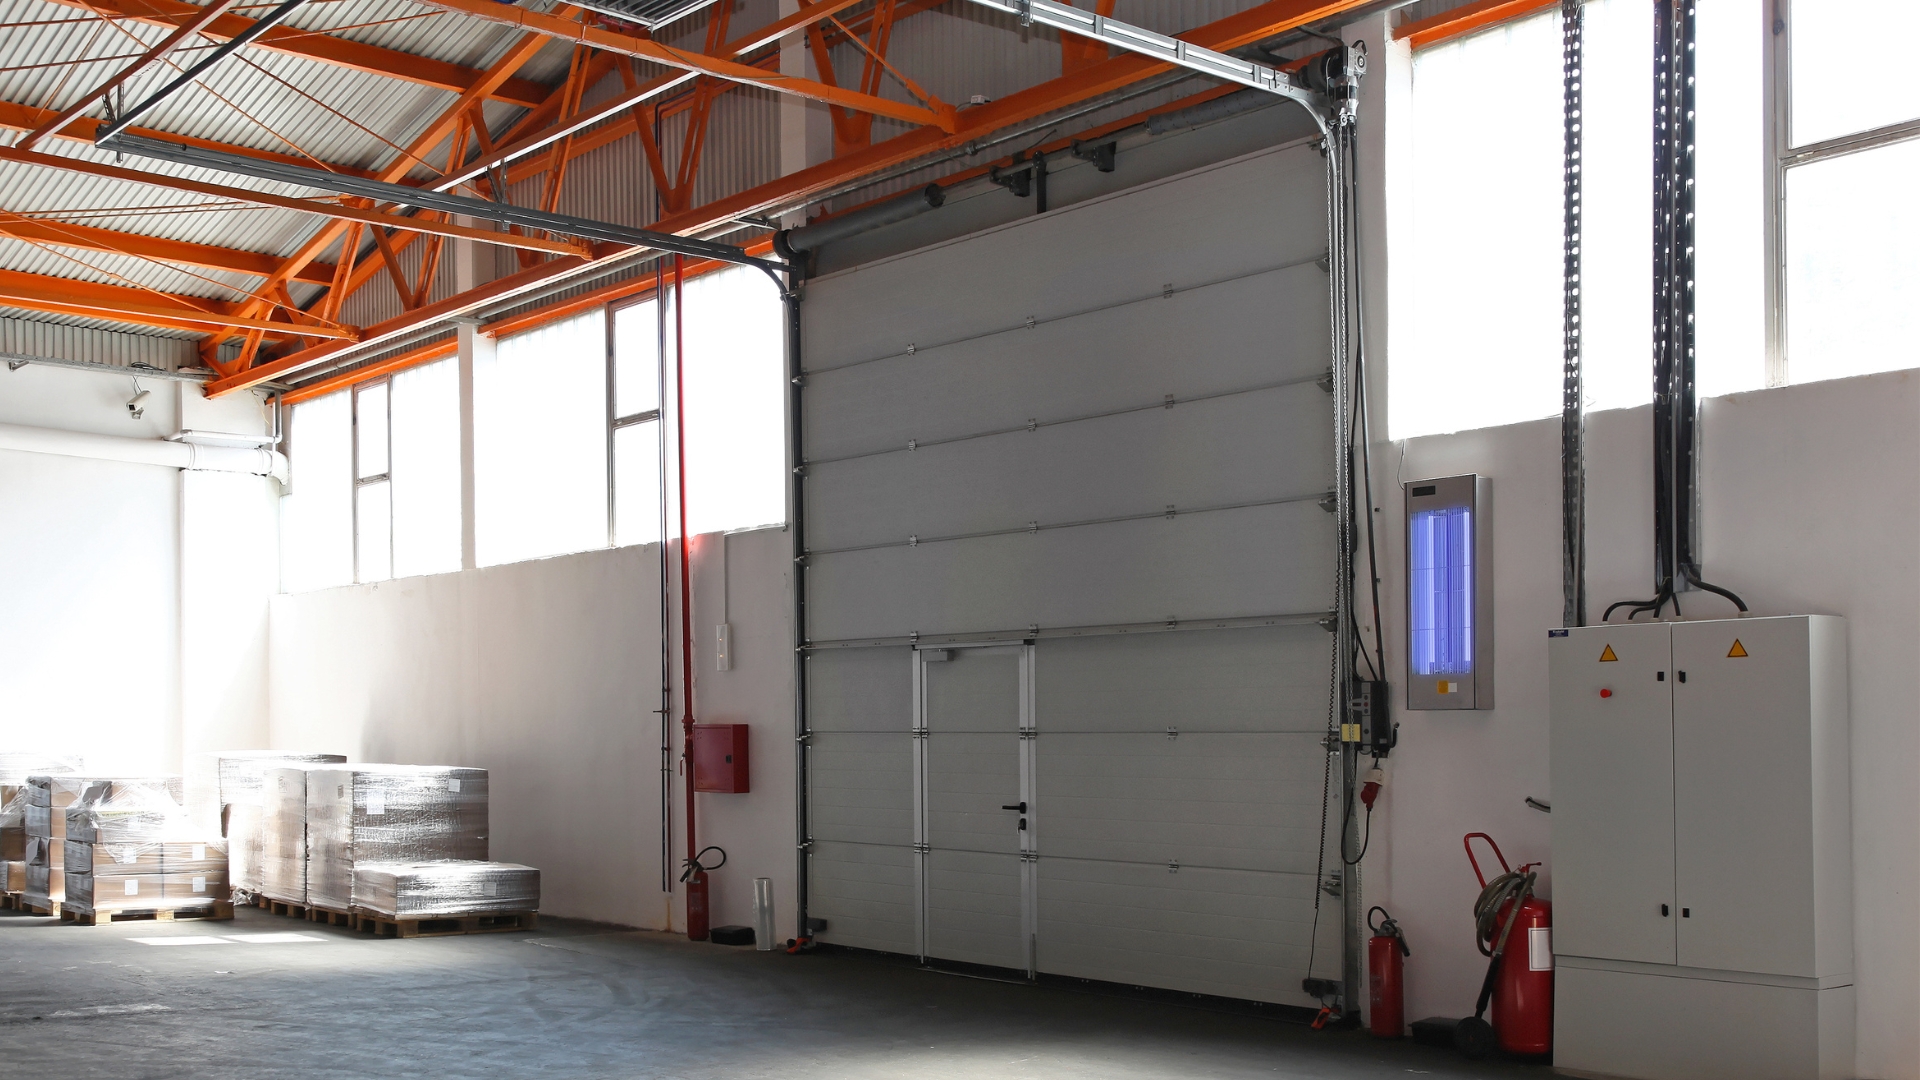 A commercial garage door with industrial torsion springs